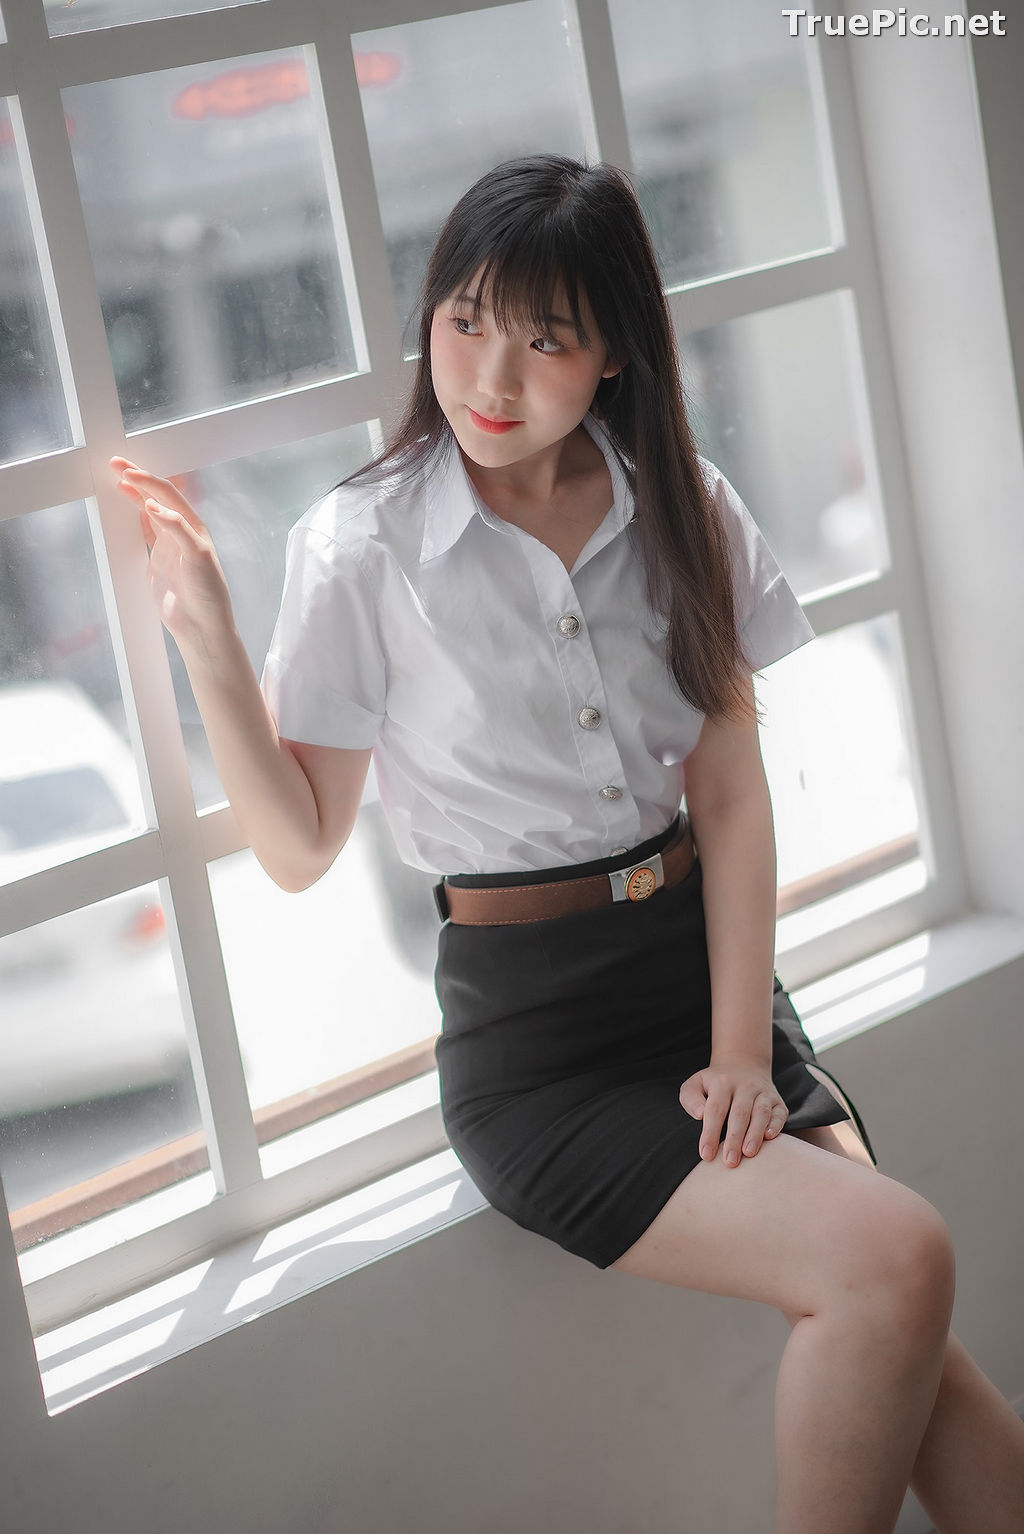 Image Thailand Model - Miki Ariyathanakit - Cute Student Girl - TruePic.net - Picture-3